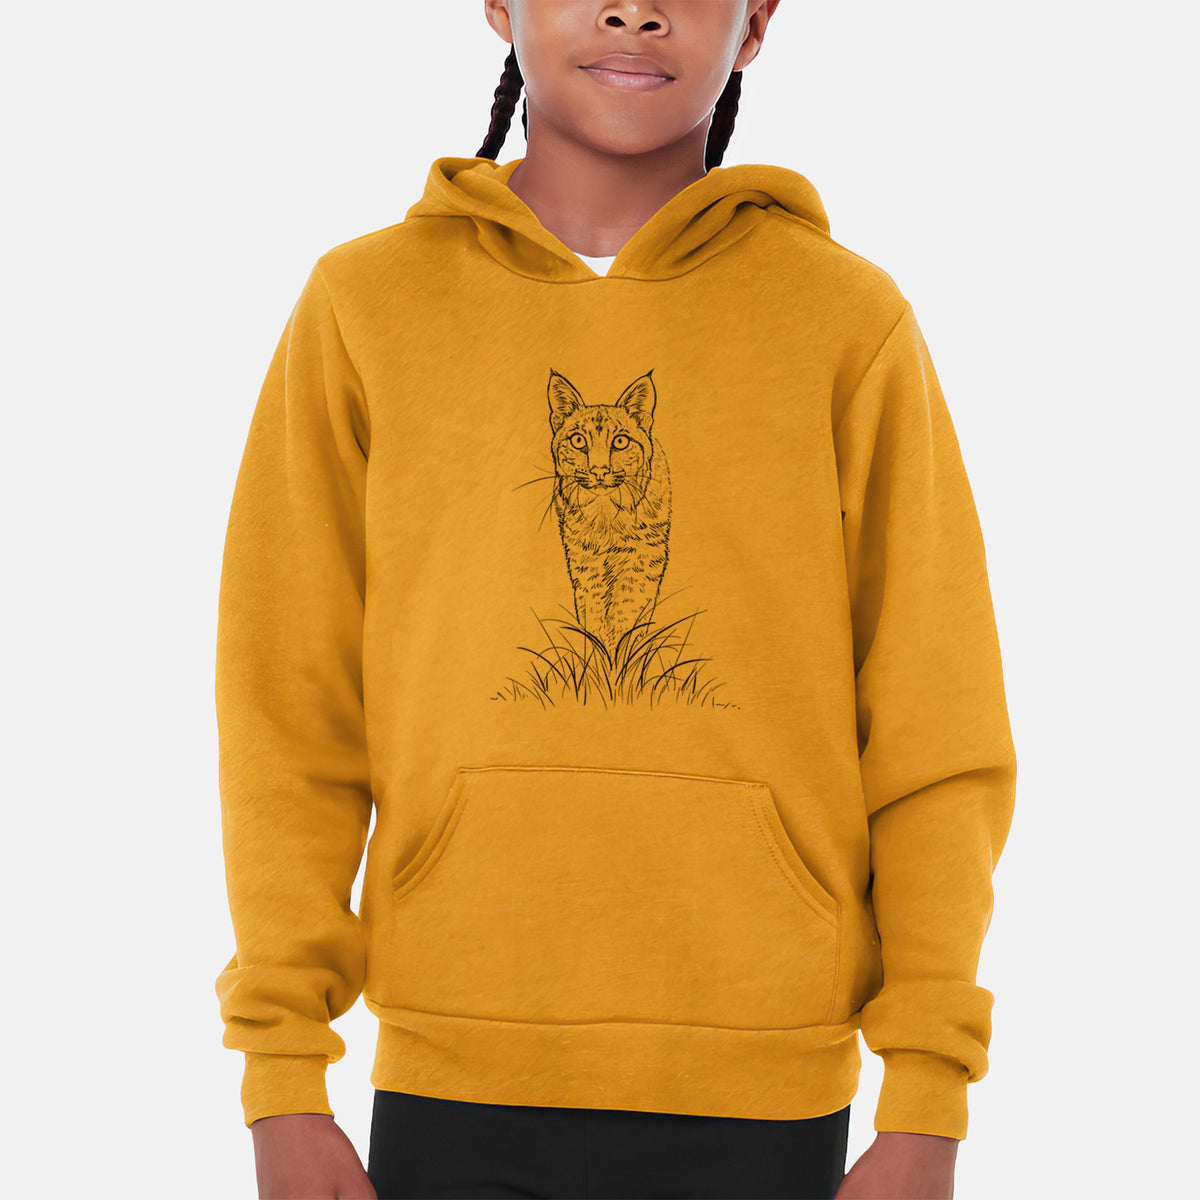 Bobcat - Lynx rufus - Youth Hoodie Sweatshirt